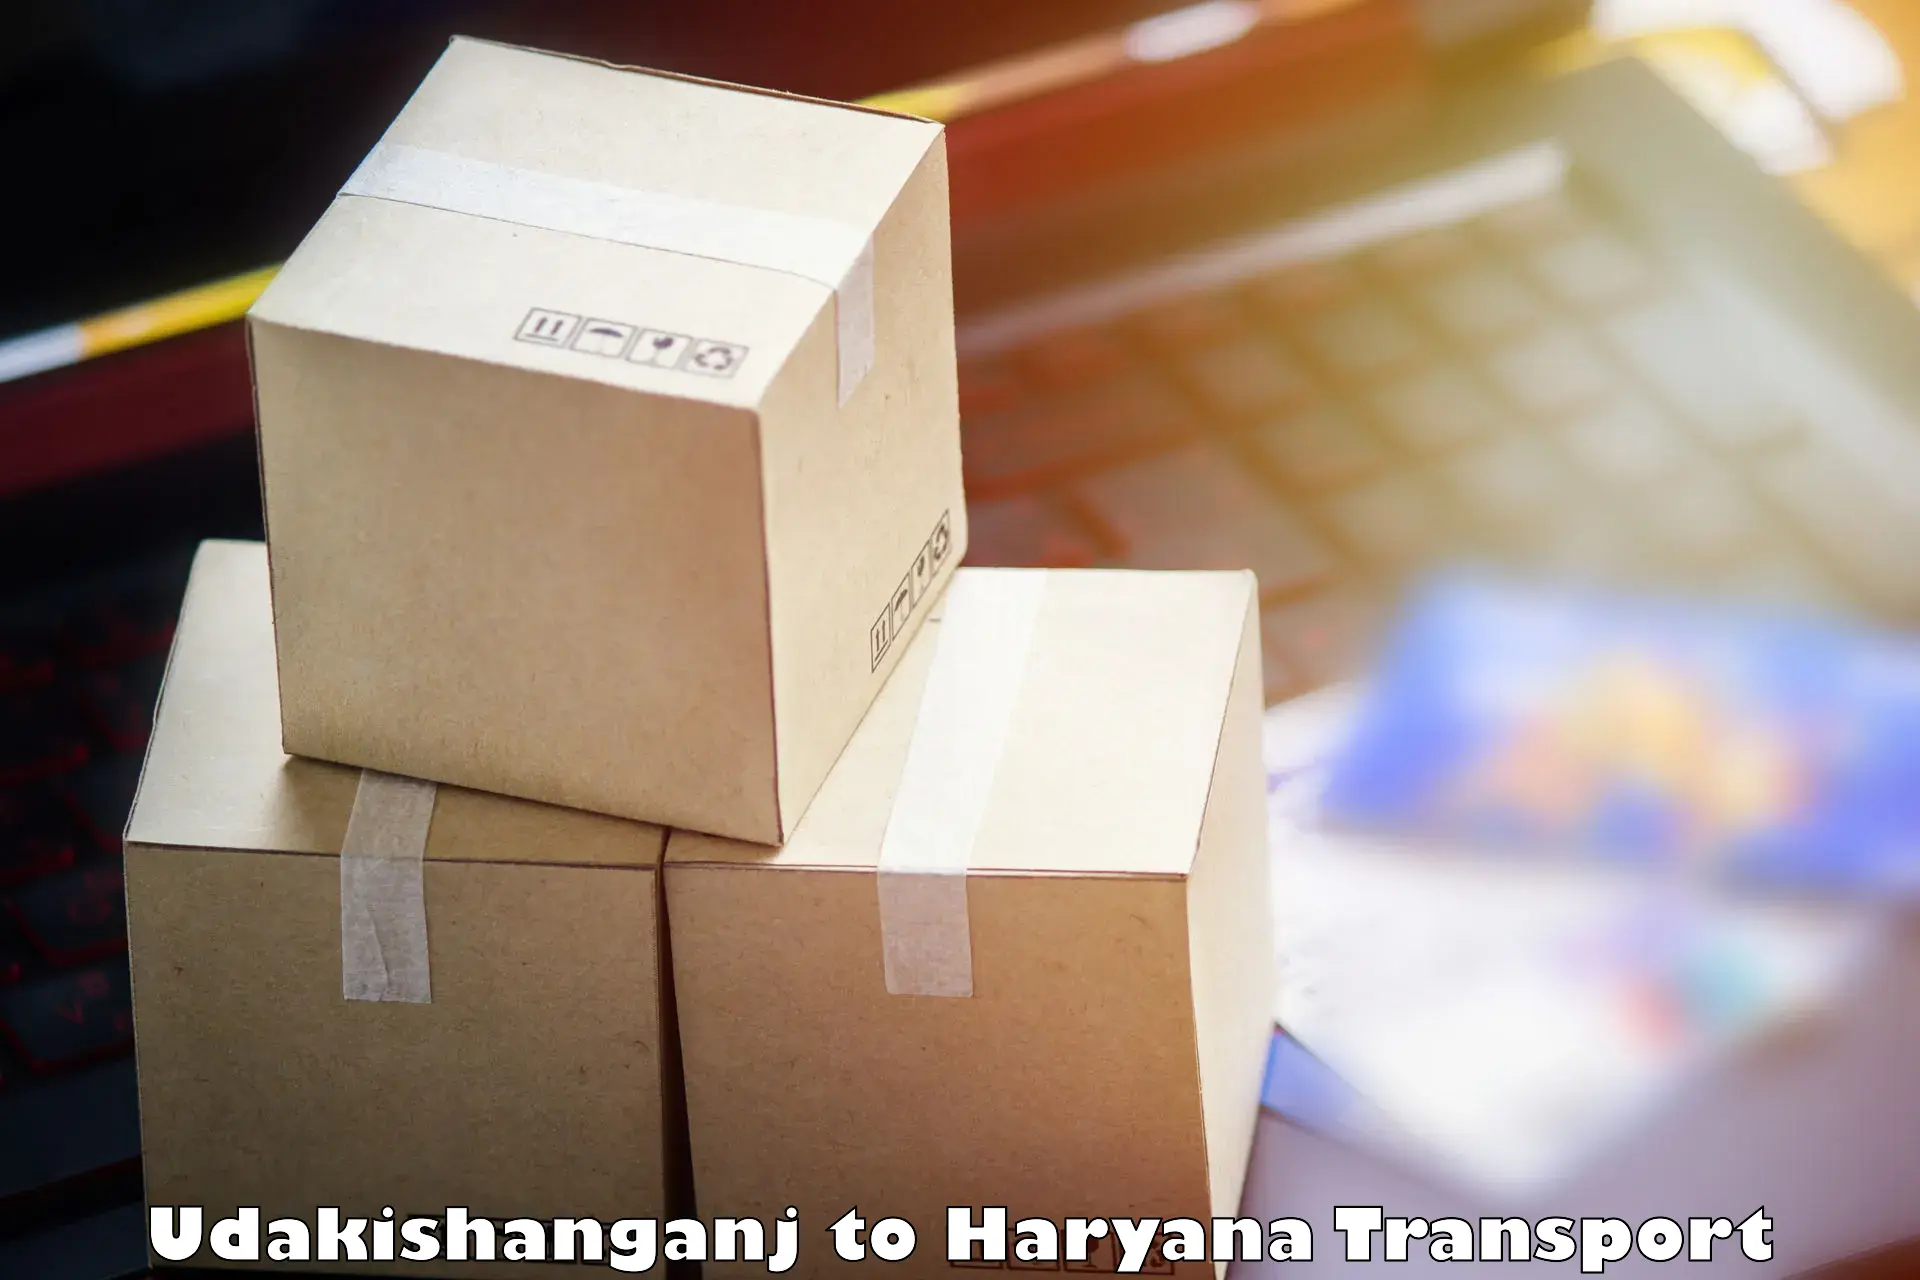 Shipping partner Udakishanganj to Hansi